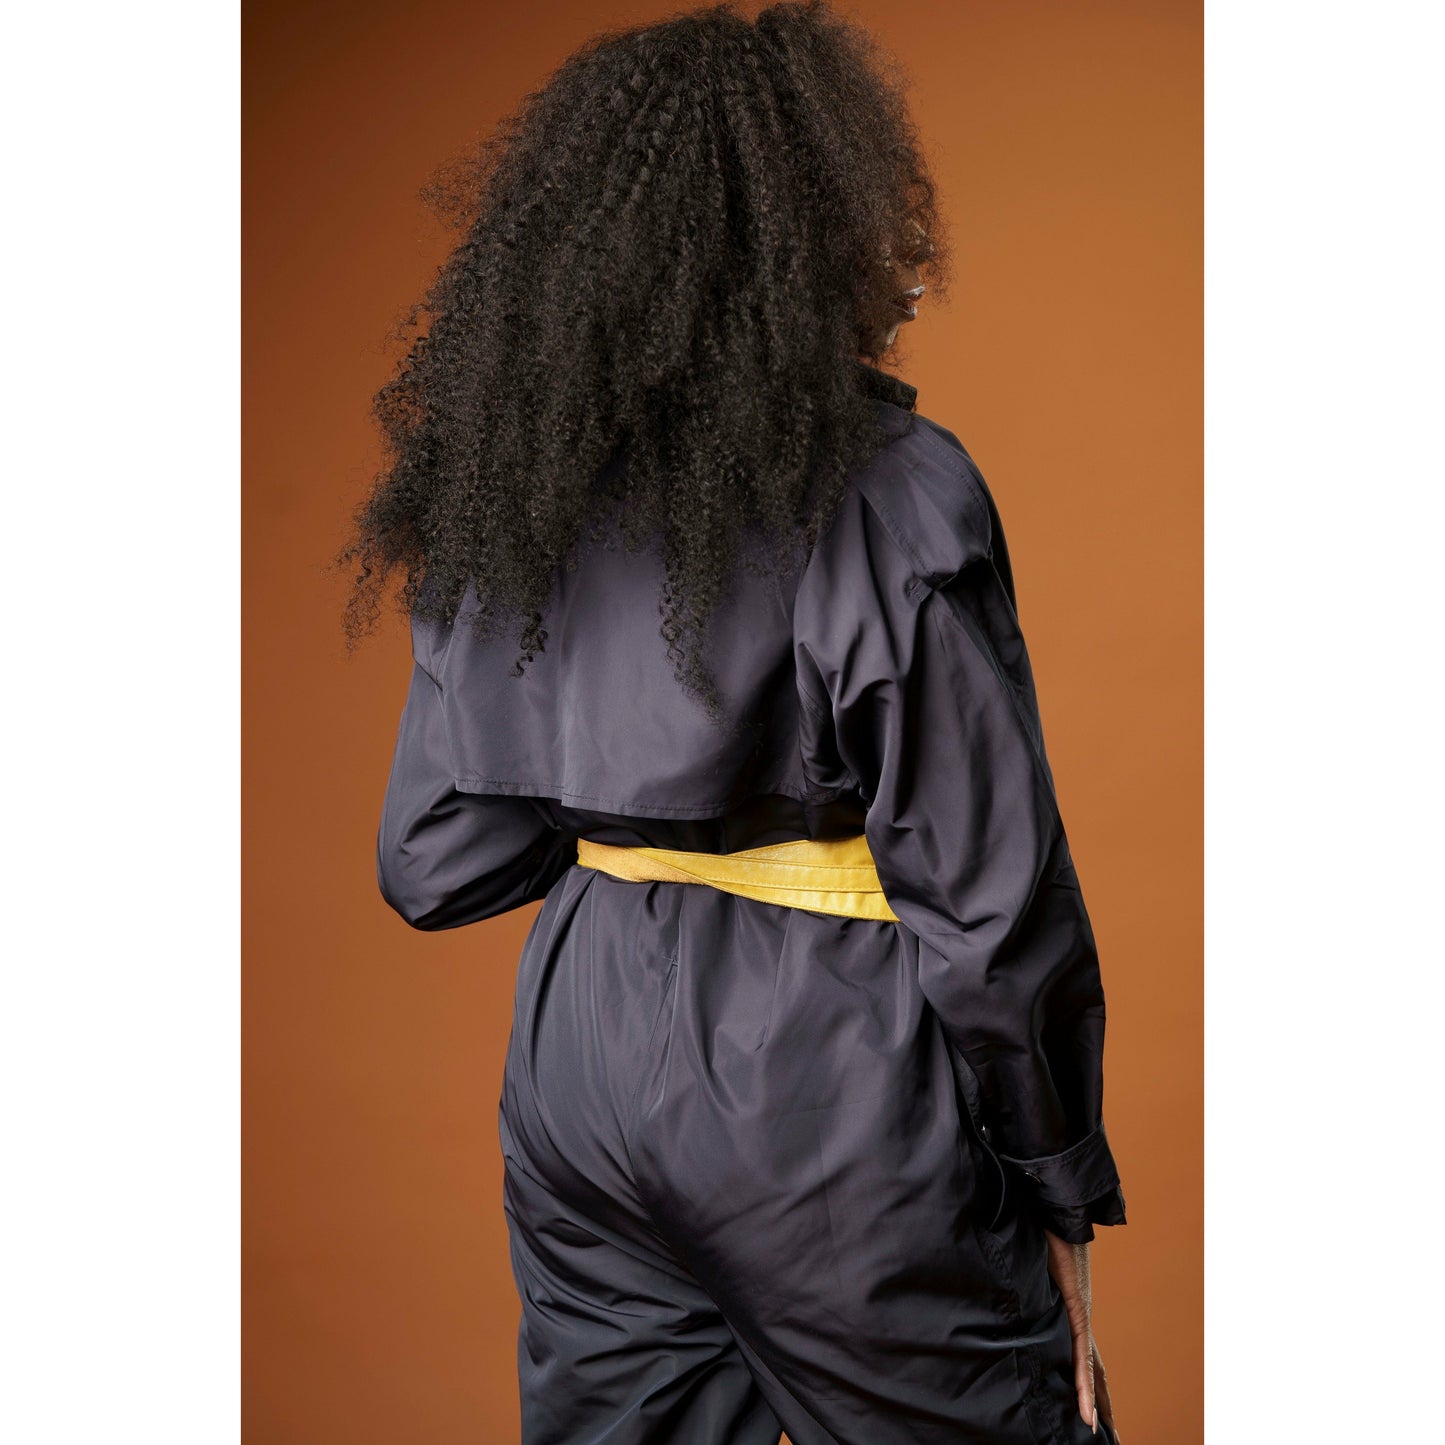 Denim Jacket Outfit - Women Jacket Outfit | Slim Pickings Design